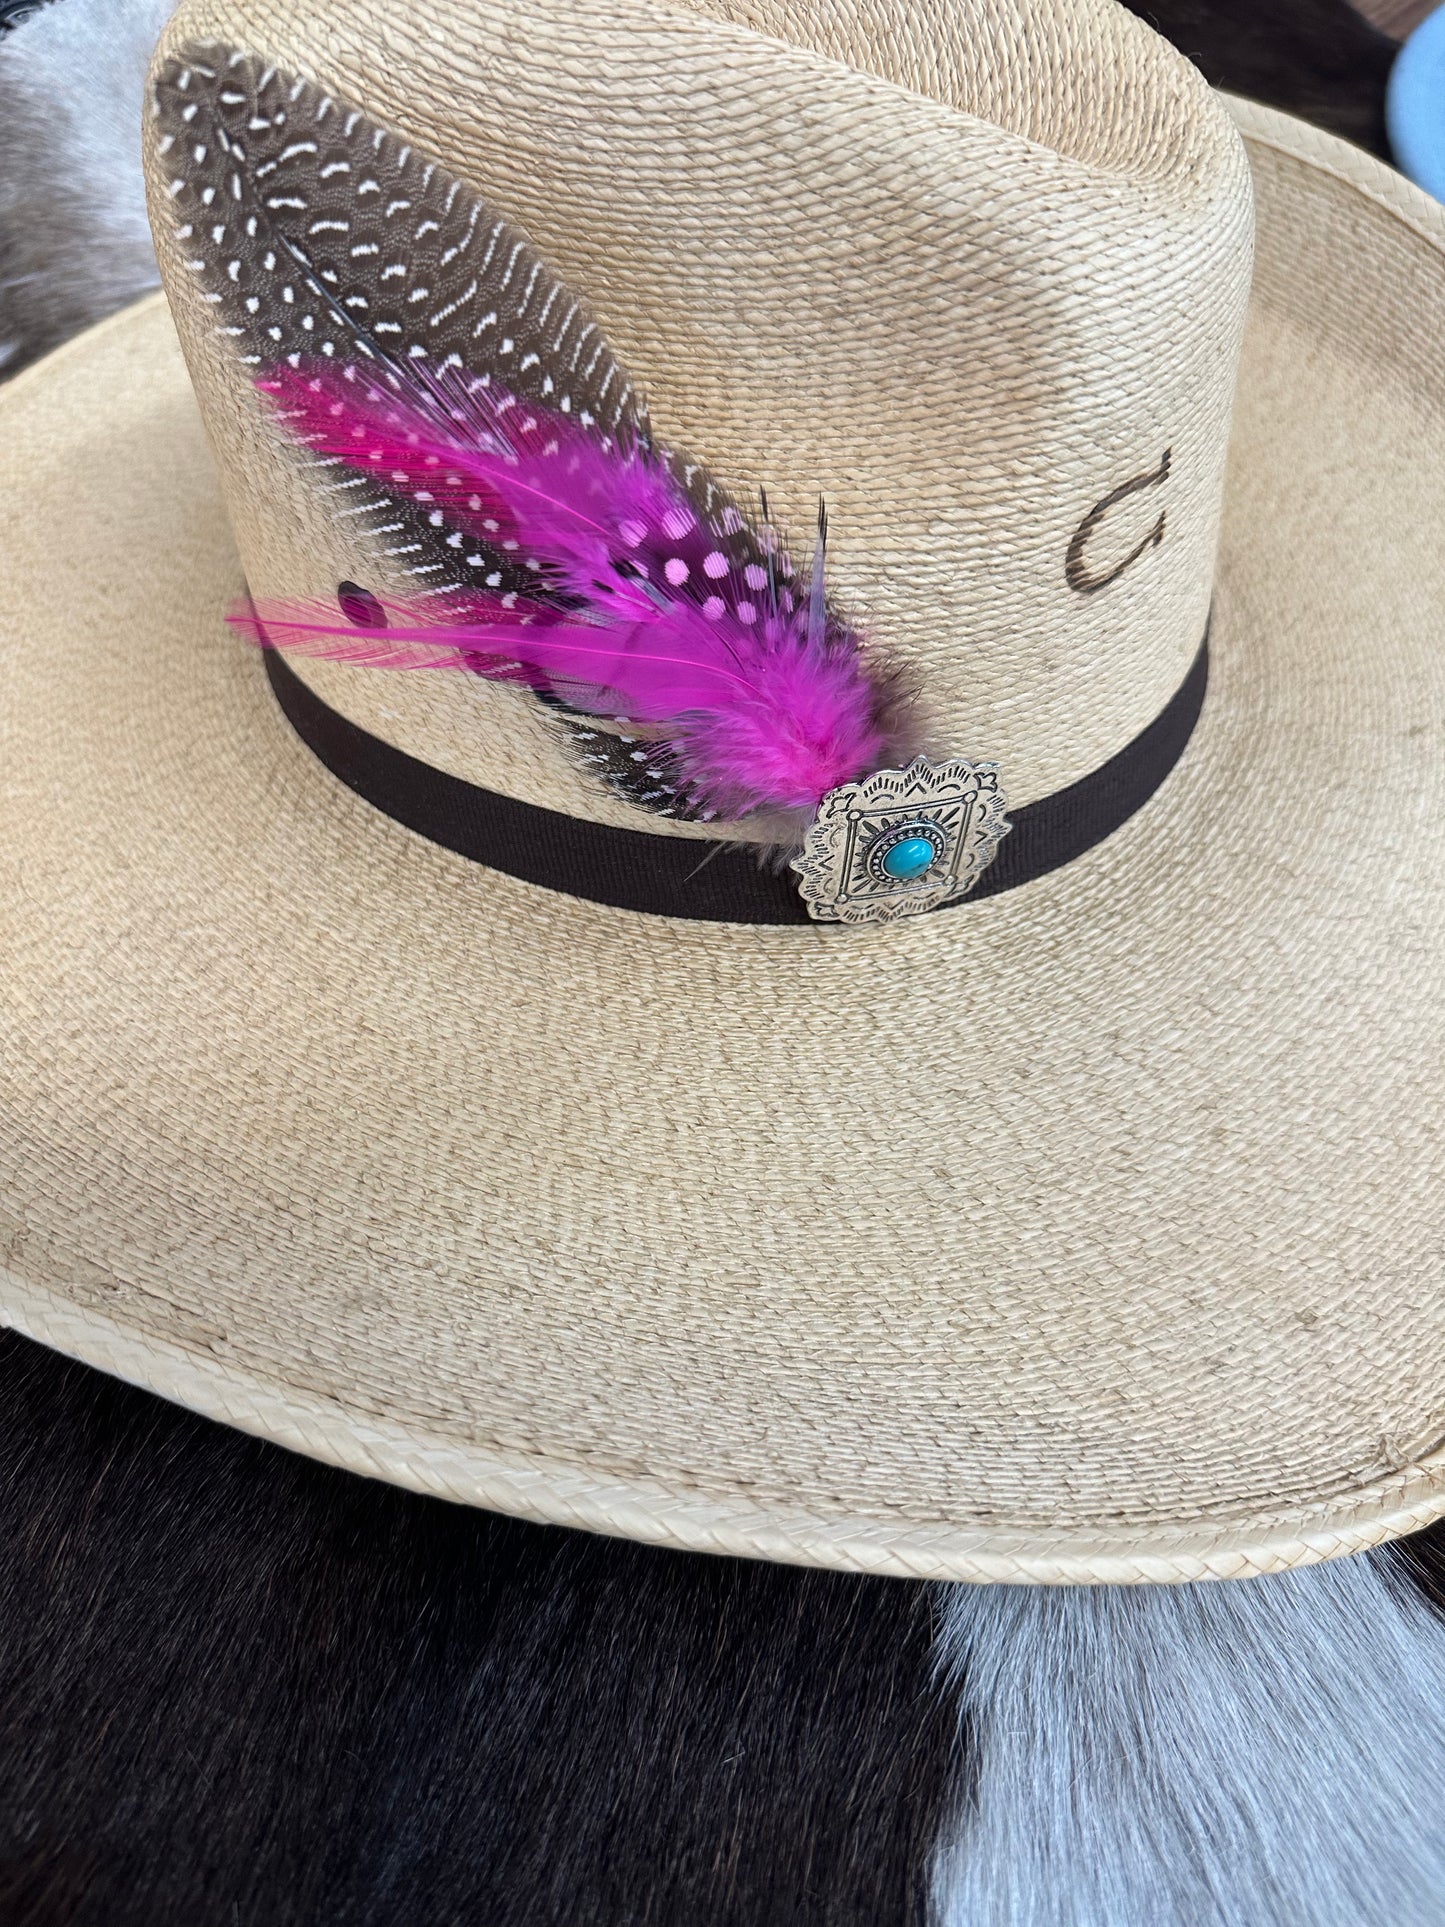 The Viva Las Vegas Feather Hat Pin